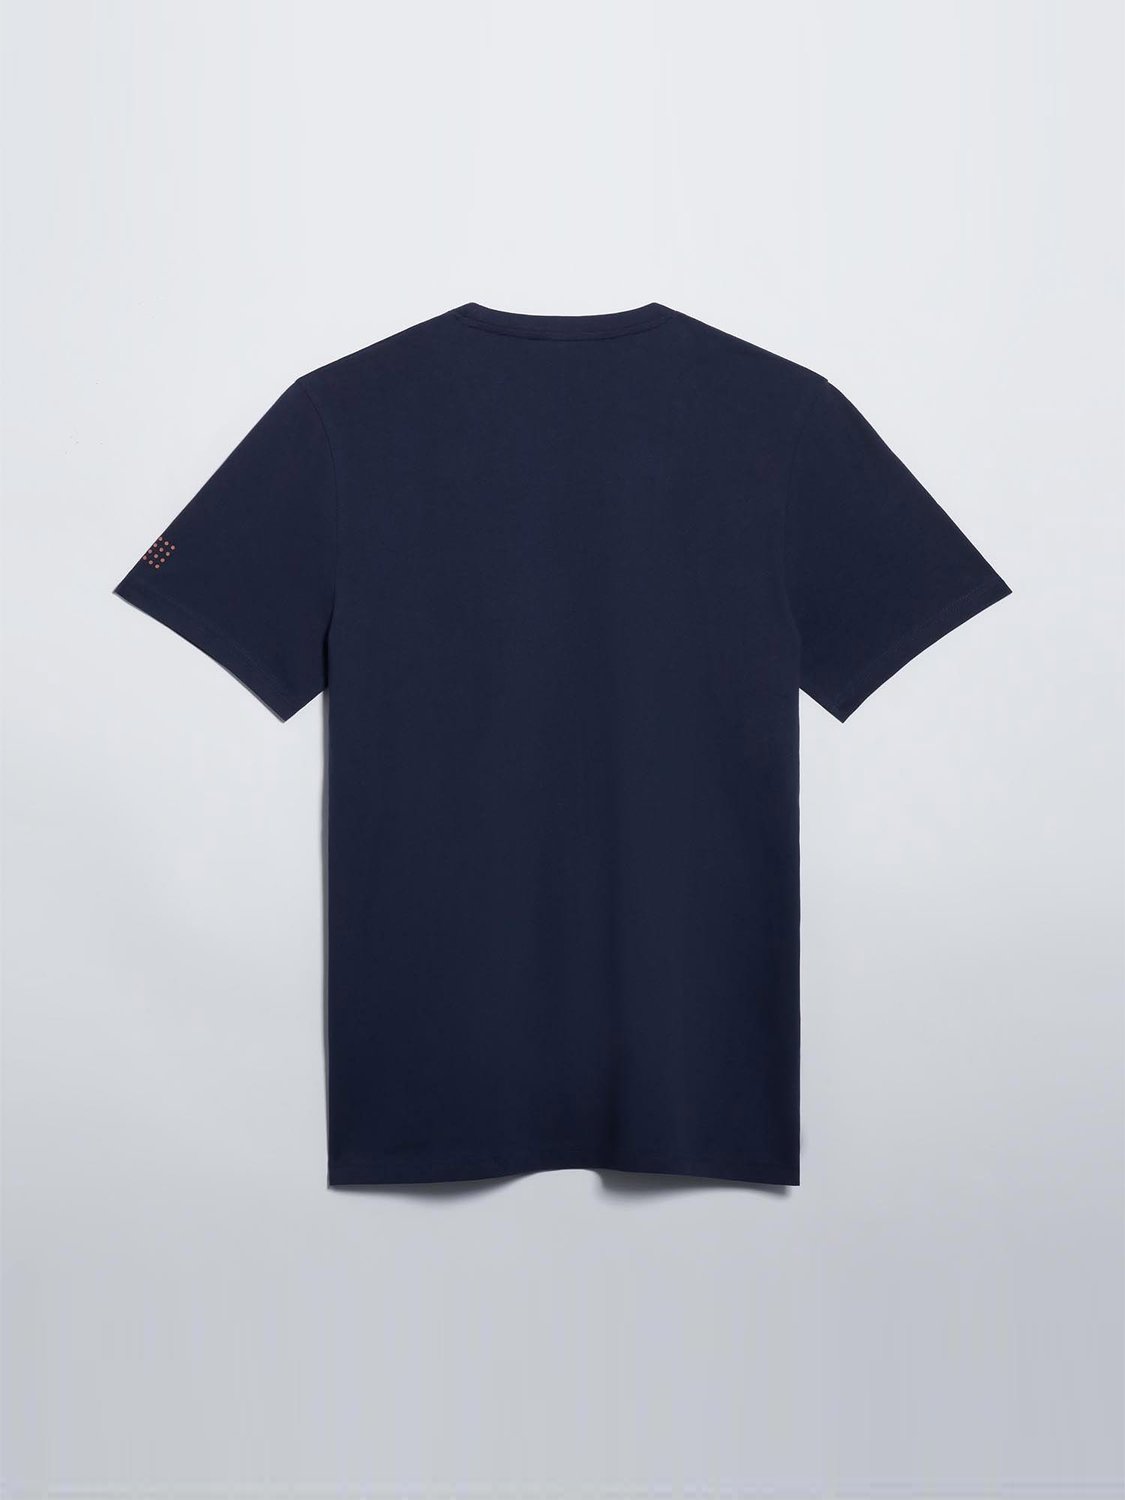 Tee Shirt homme Print Coton Biologique Bleu Marine